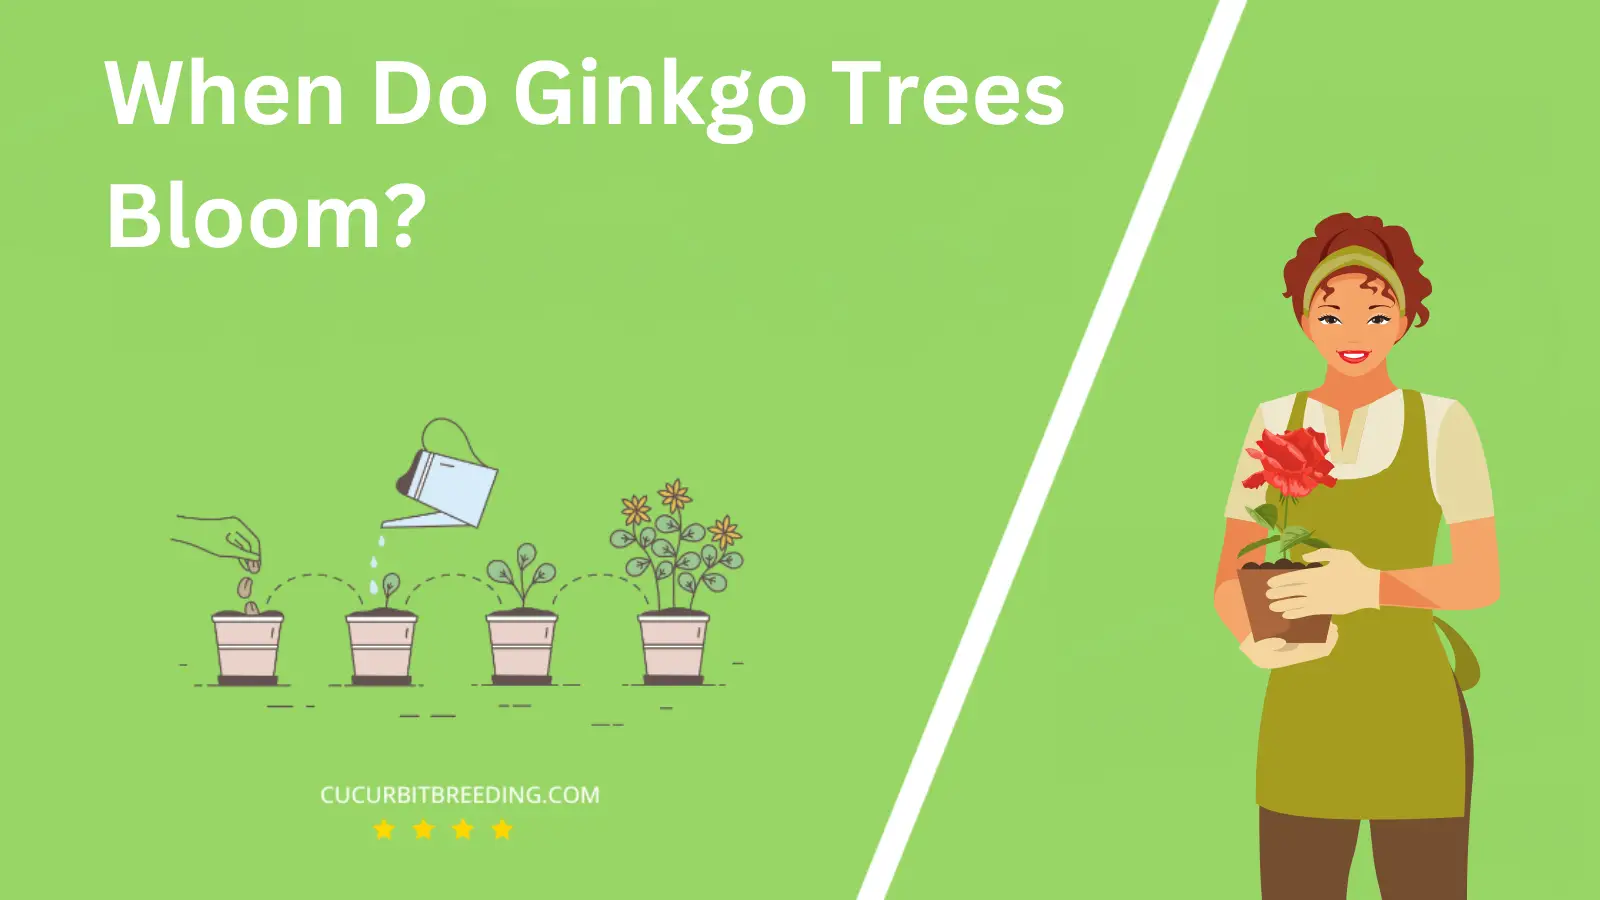 When Do Ginkgo Trees Bloom?